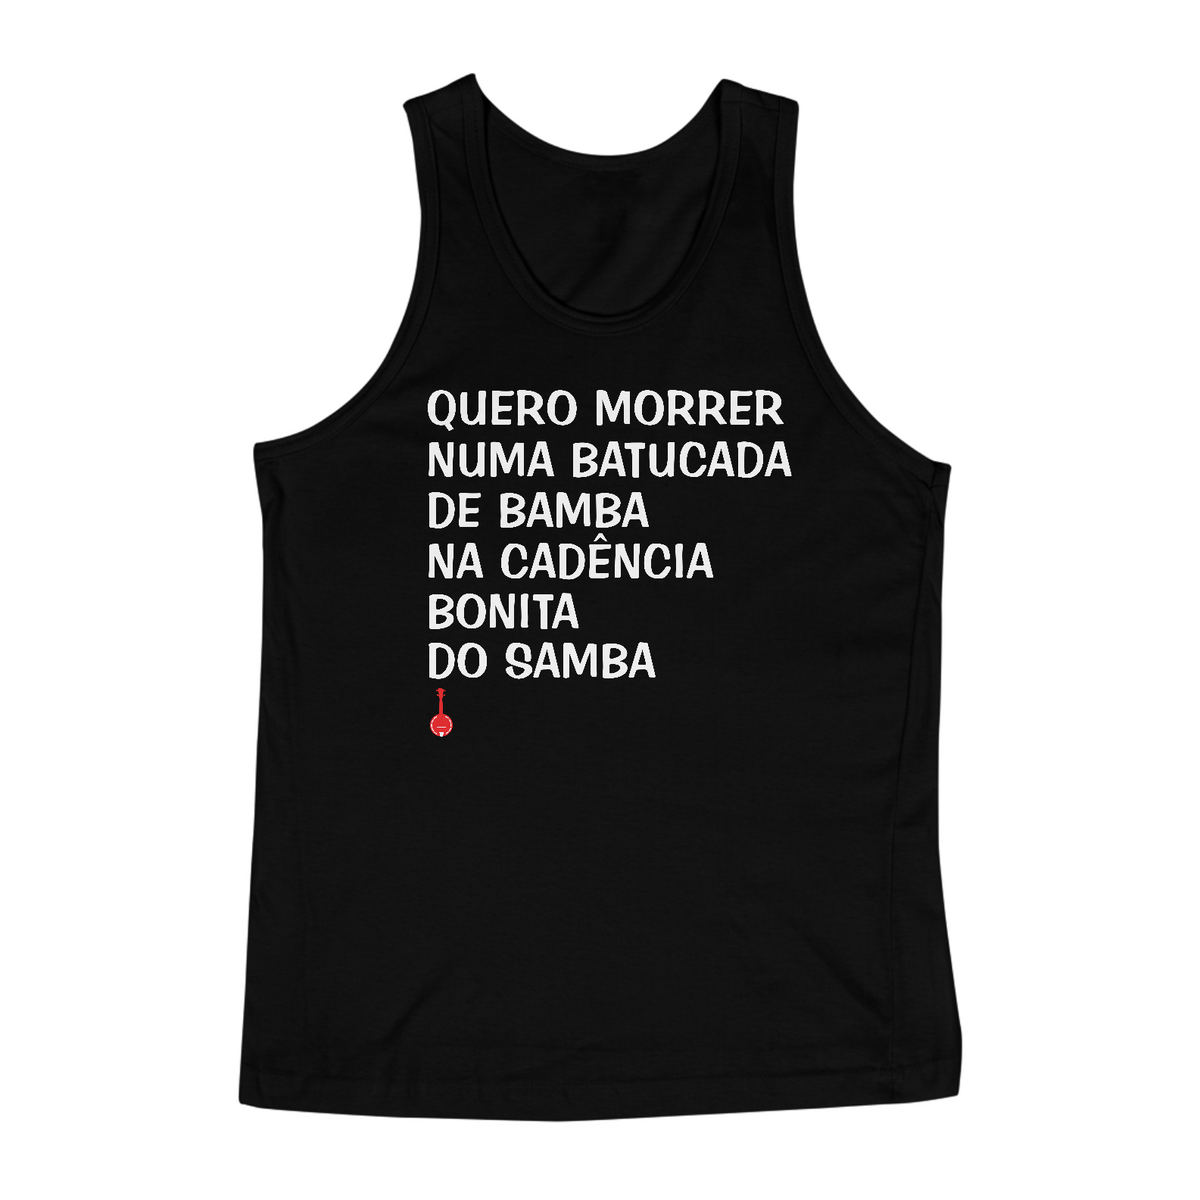 Nome do produto: Camiseta Regata Quero Morrer Numa Batucada de Bamba - Preta